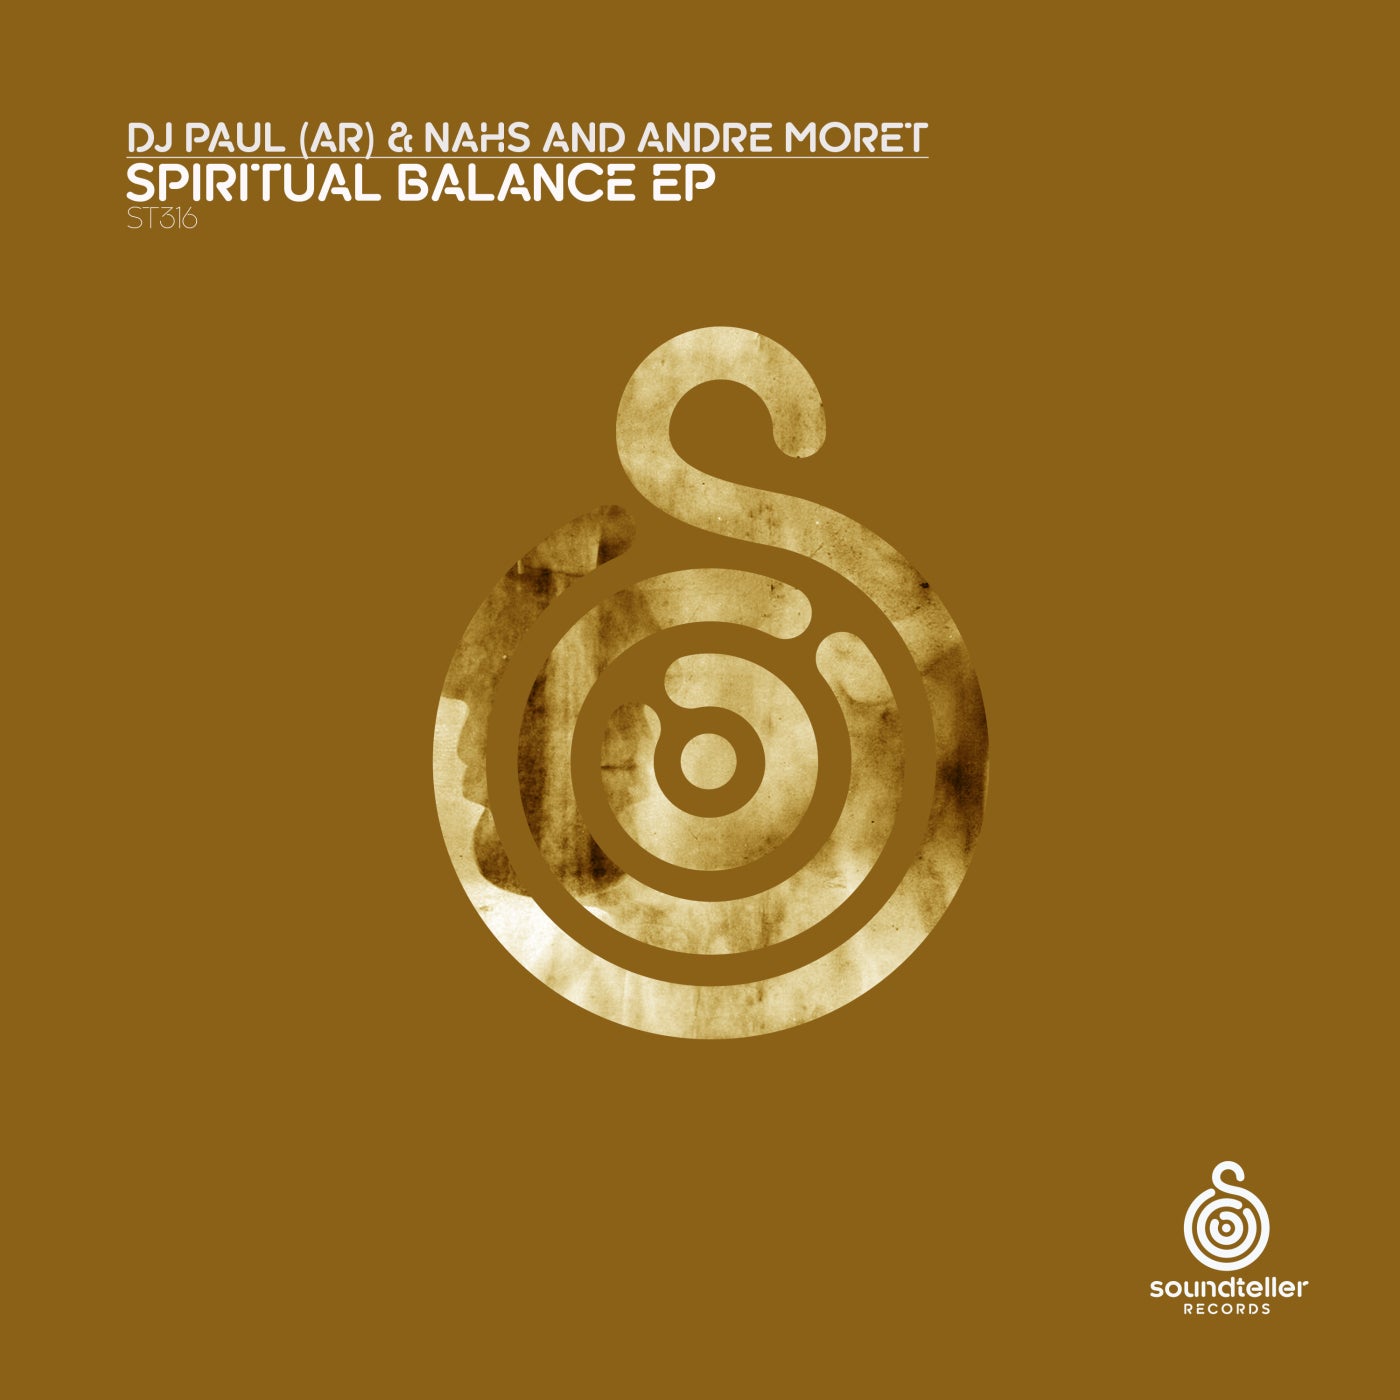 DJ Paul (AR) & NAHS & Andre Moret - Spiritual Balance EP [ST316]